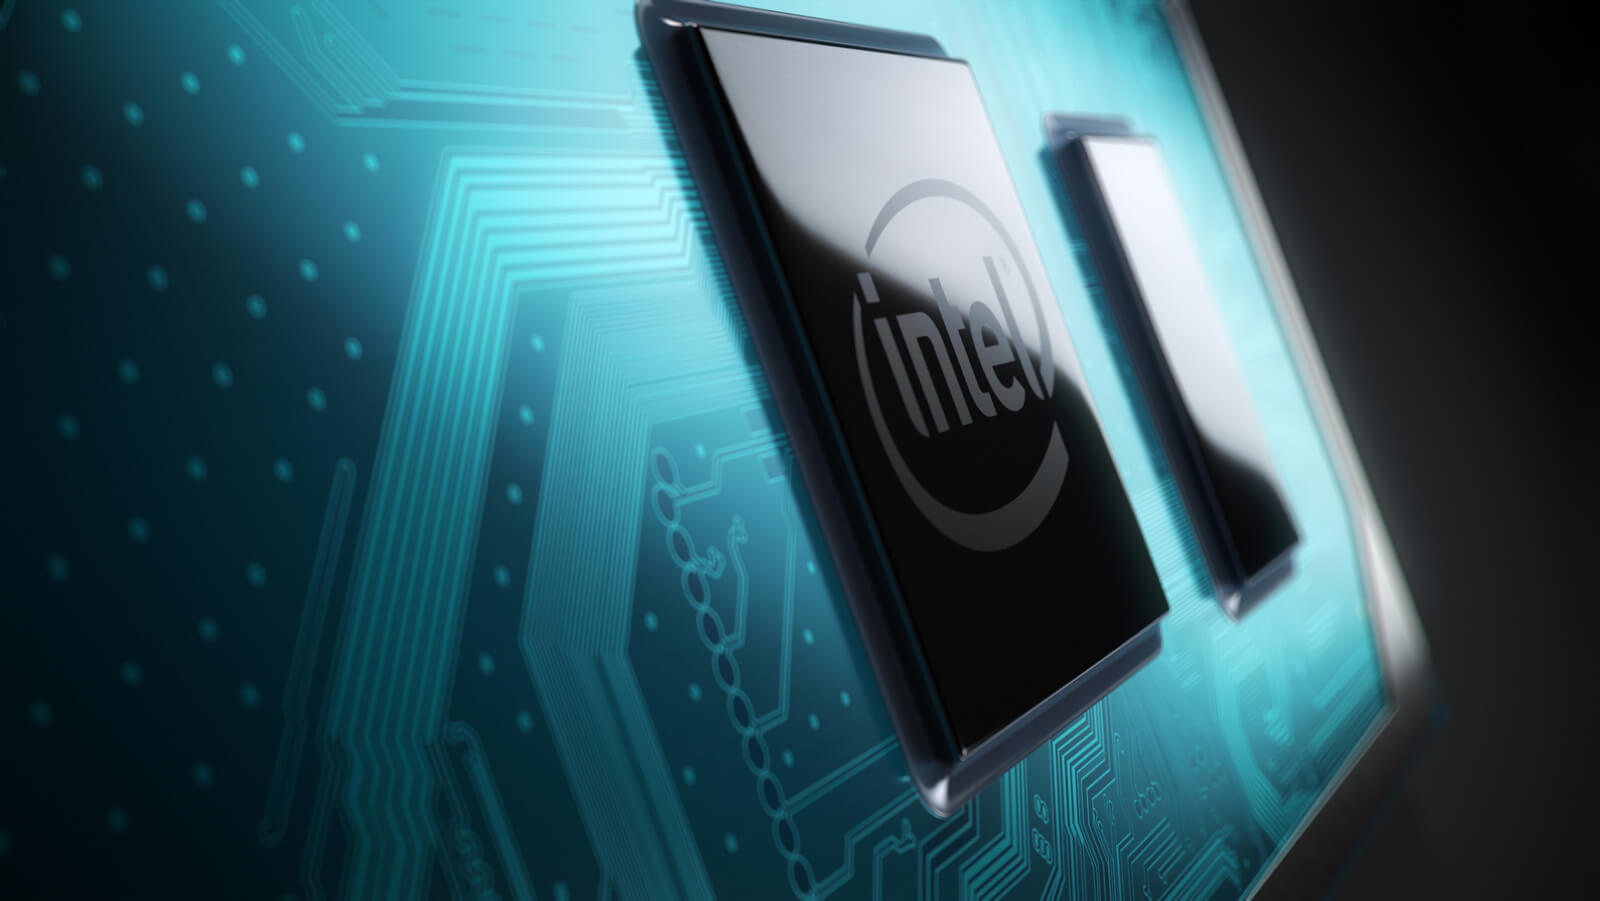 Intel Iris Plus Graphics G7 iGPU gives AMD RX Vega 10 a run for its money